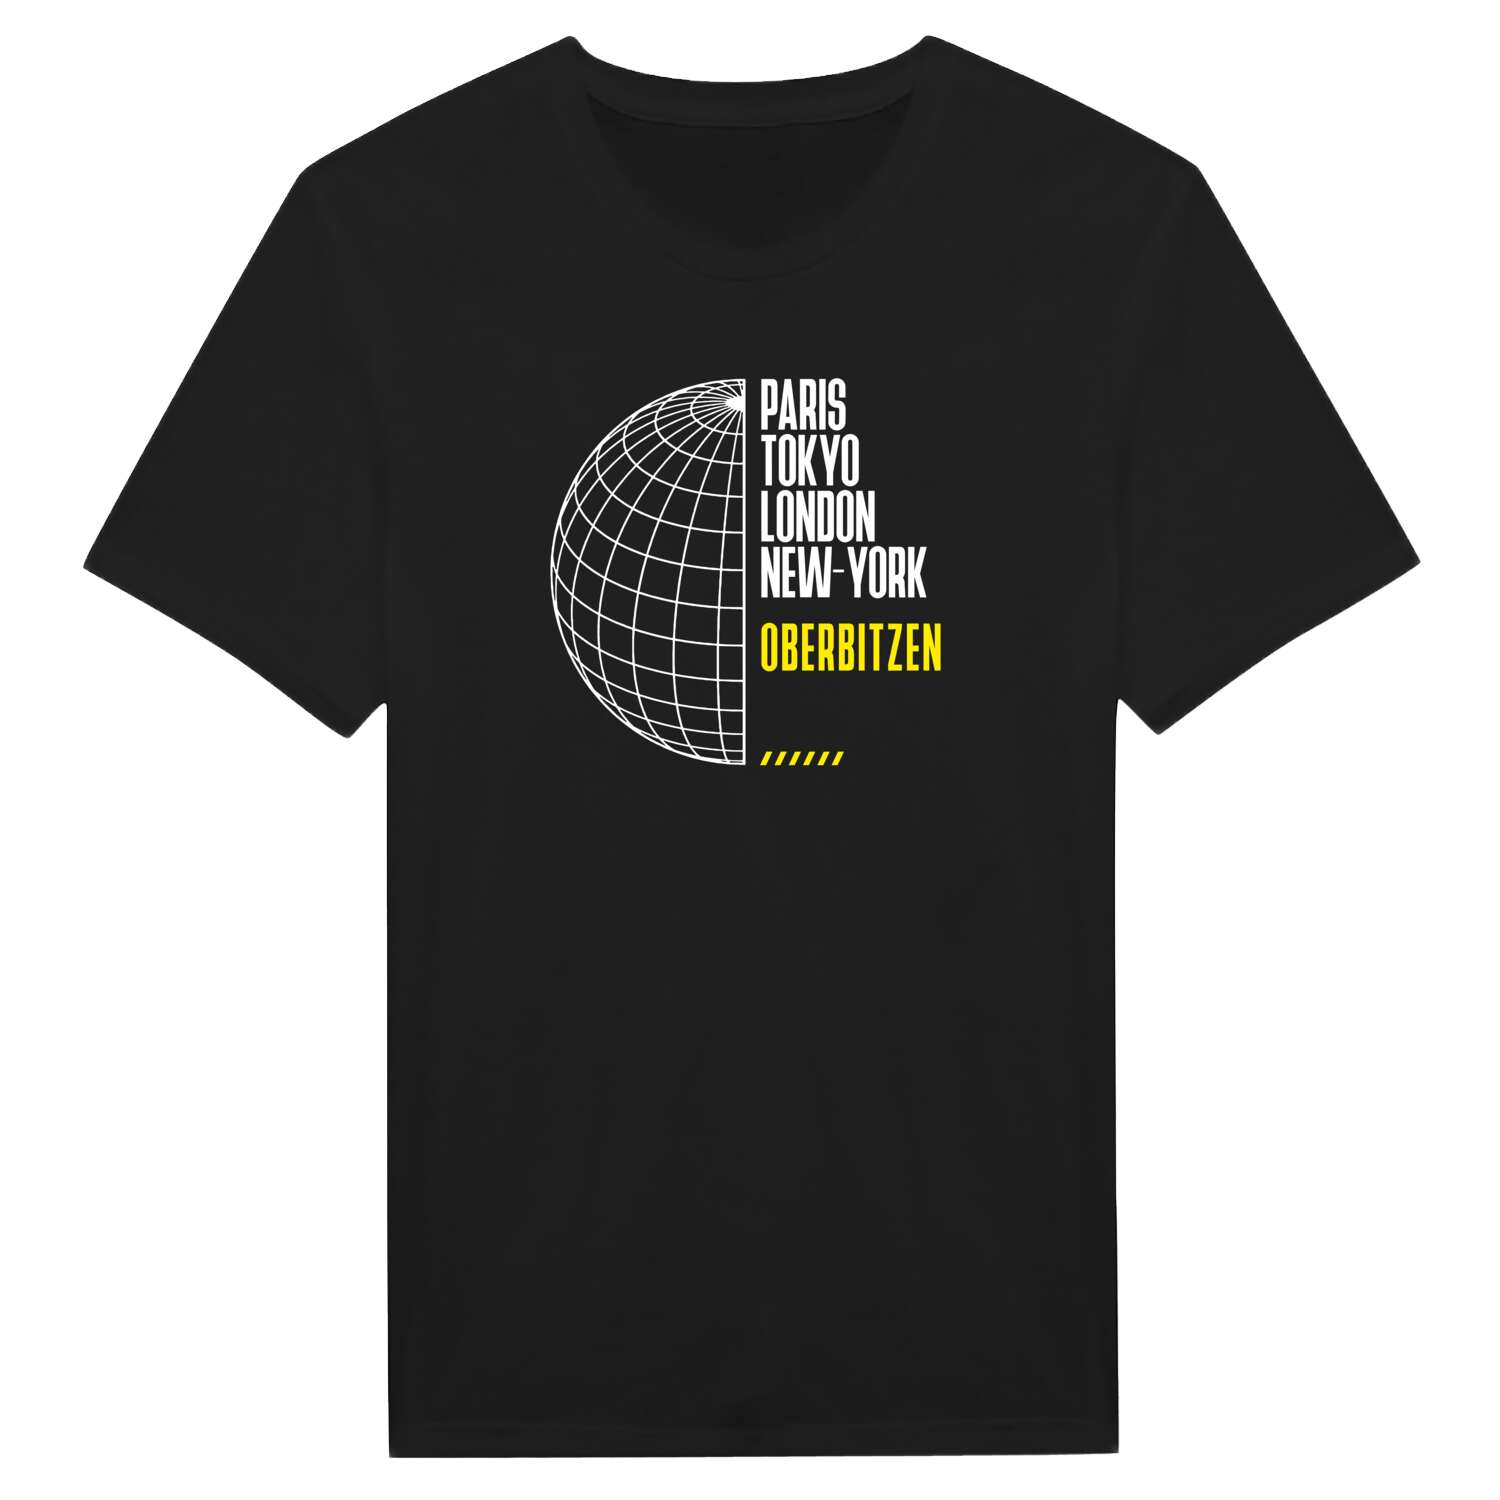 Oberbitzen T-Shirt »Paris Tokyo London«